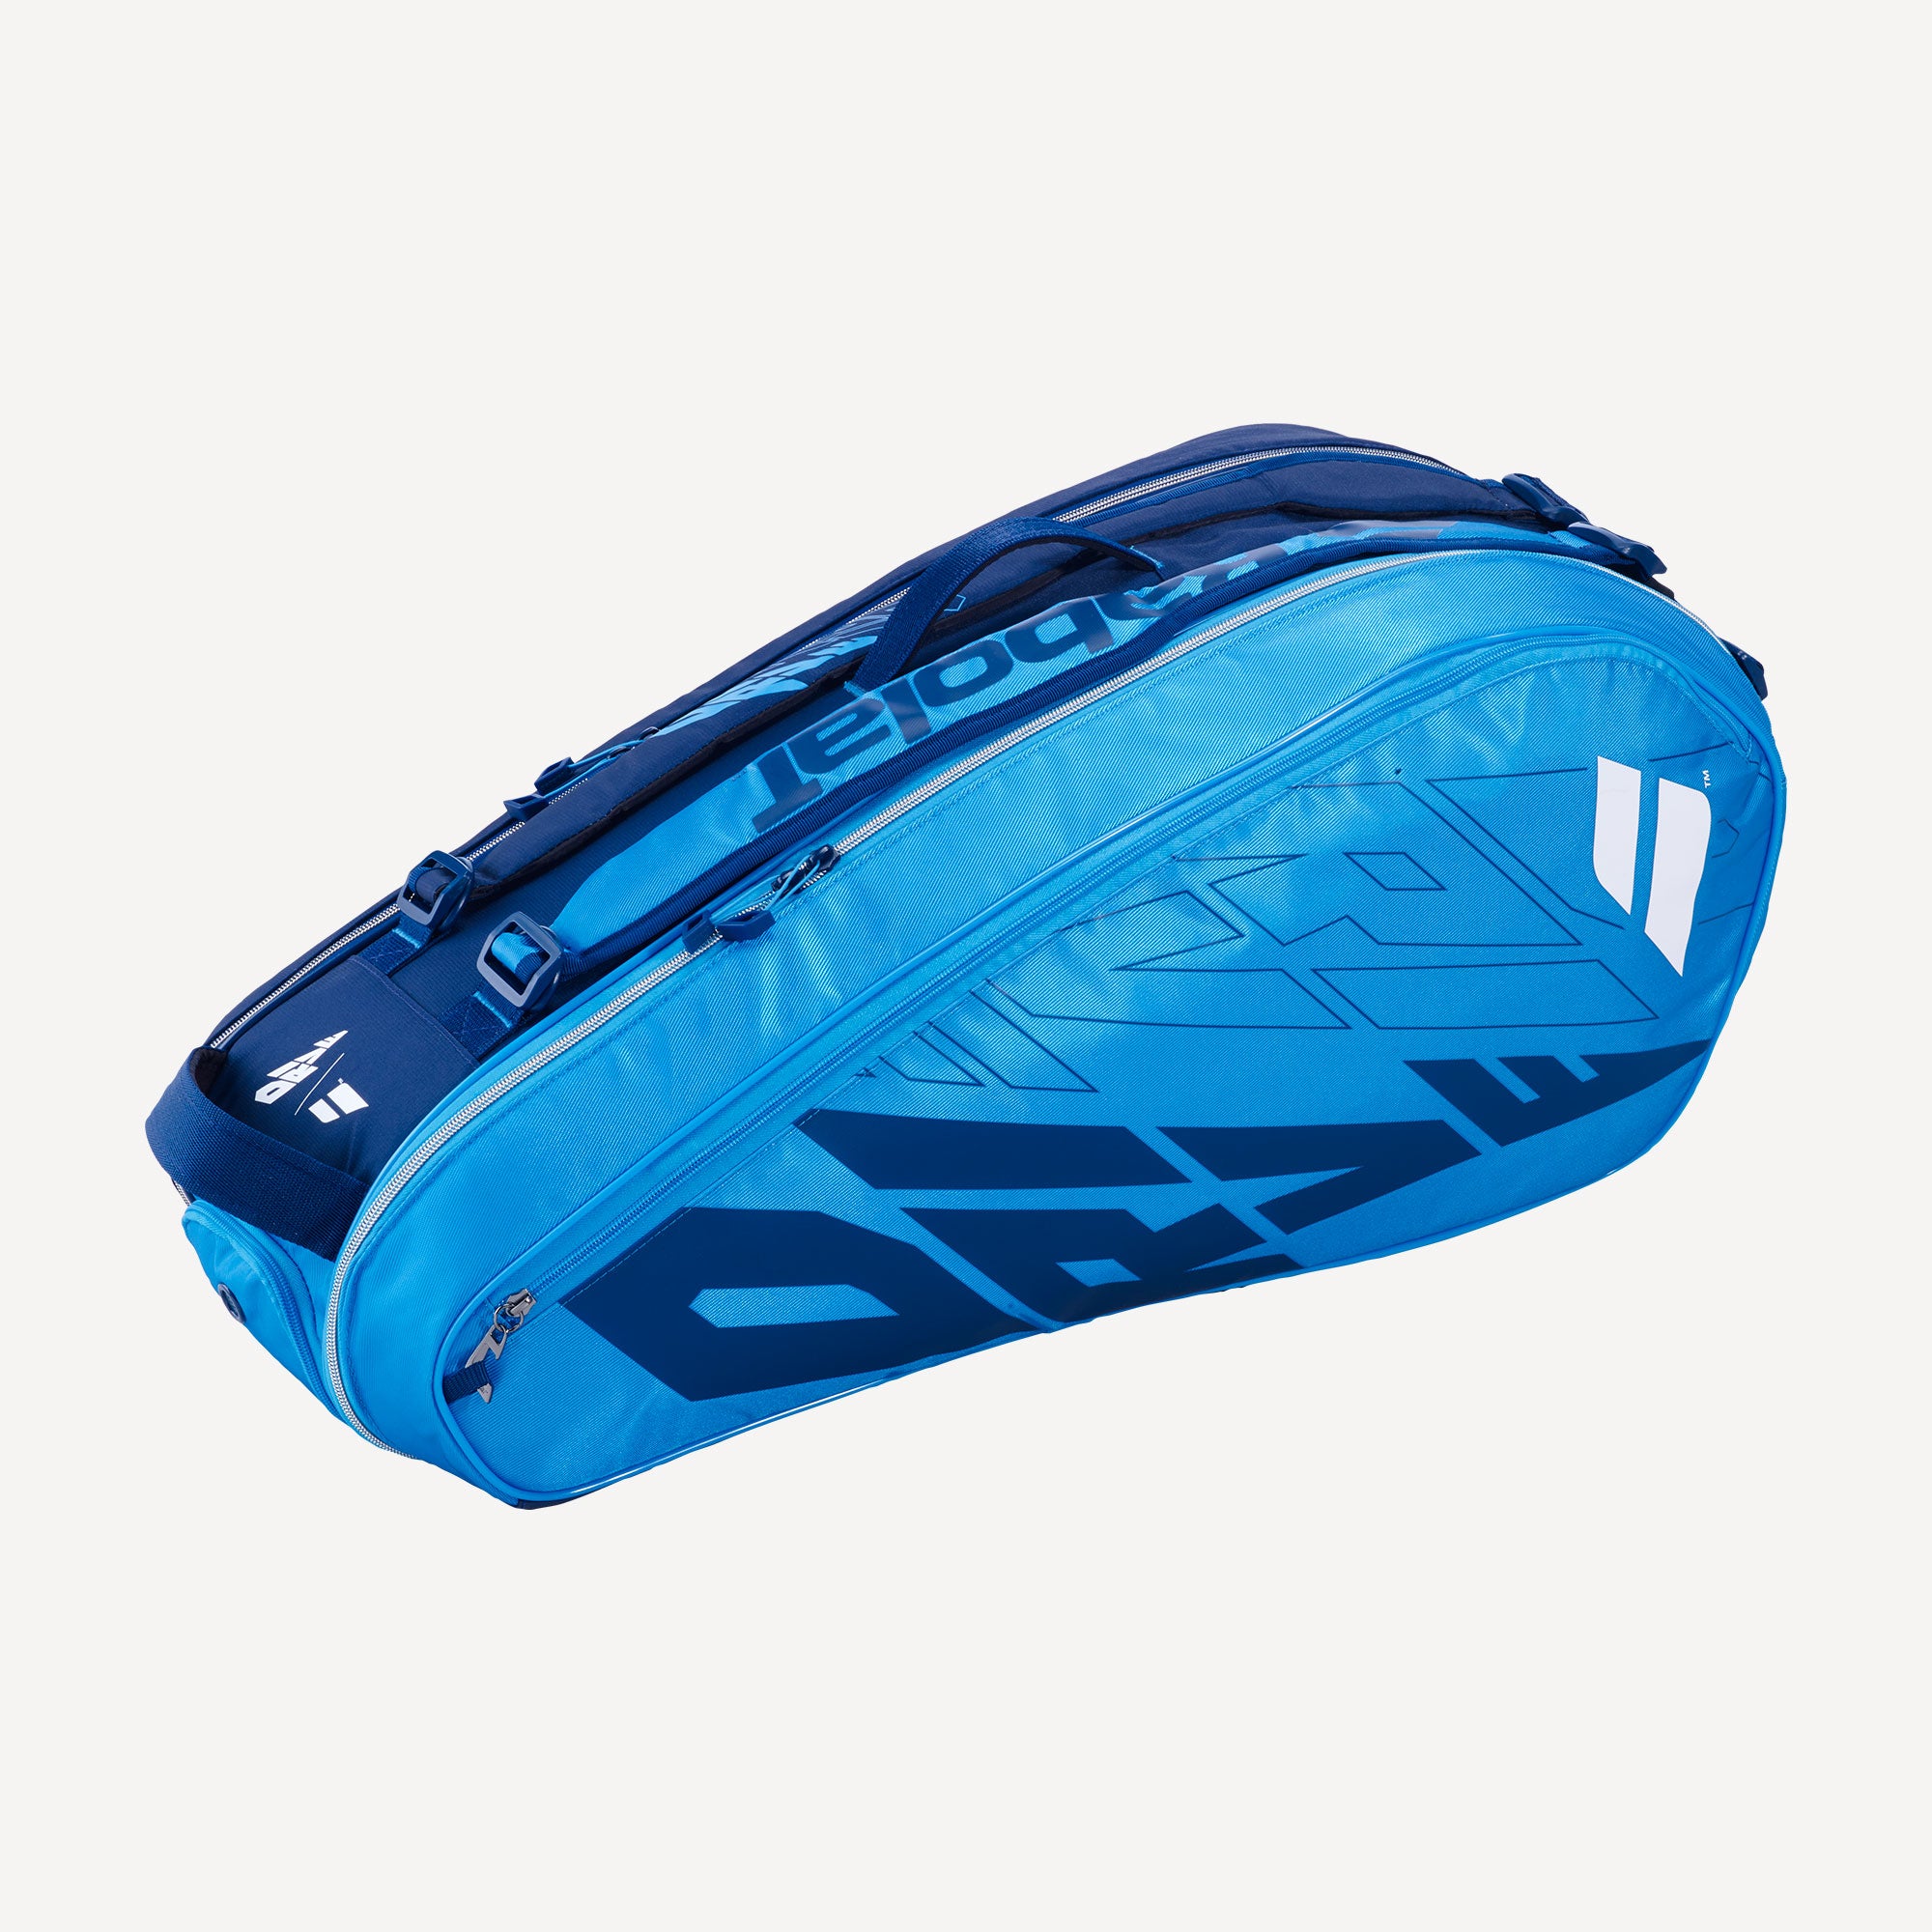 Babolat Pure Drive RH X6 Tennis Bag Blue (2)